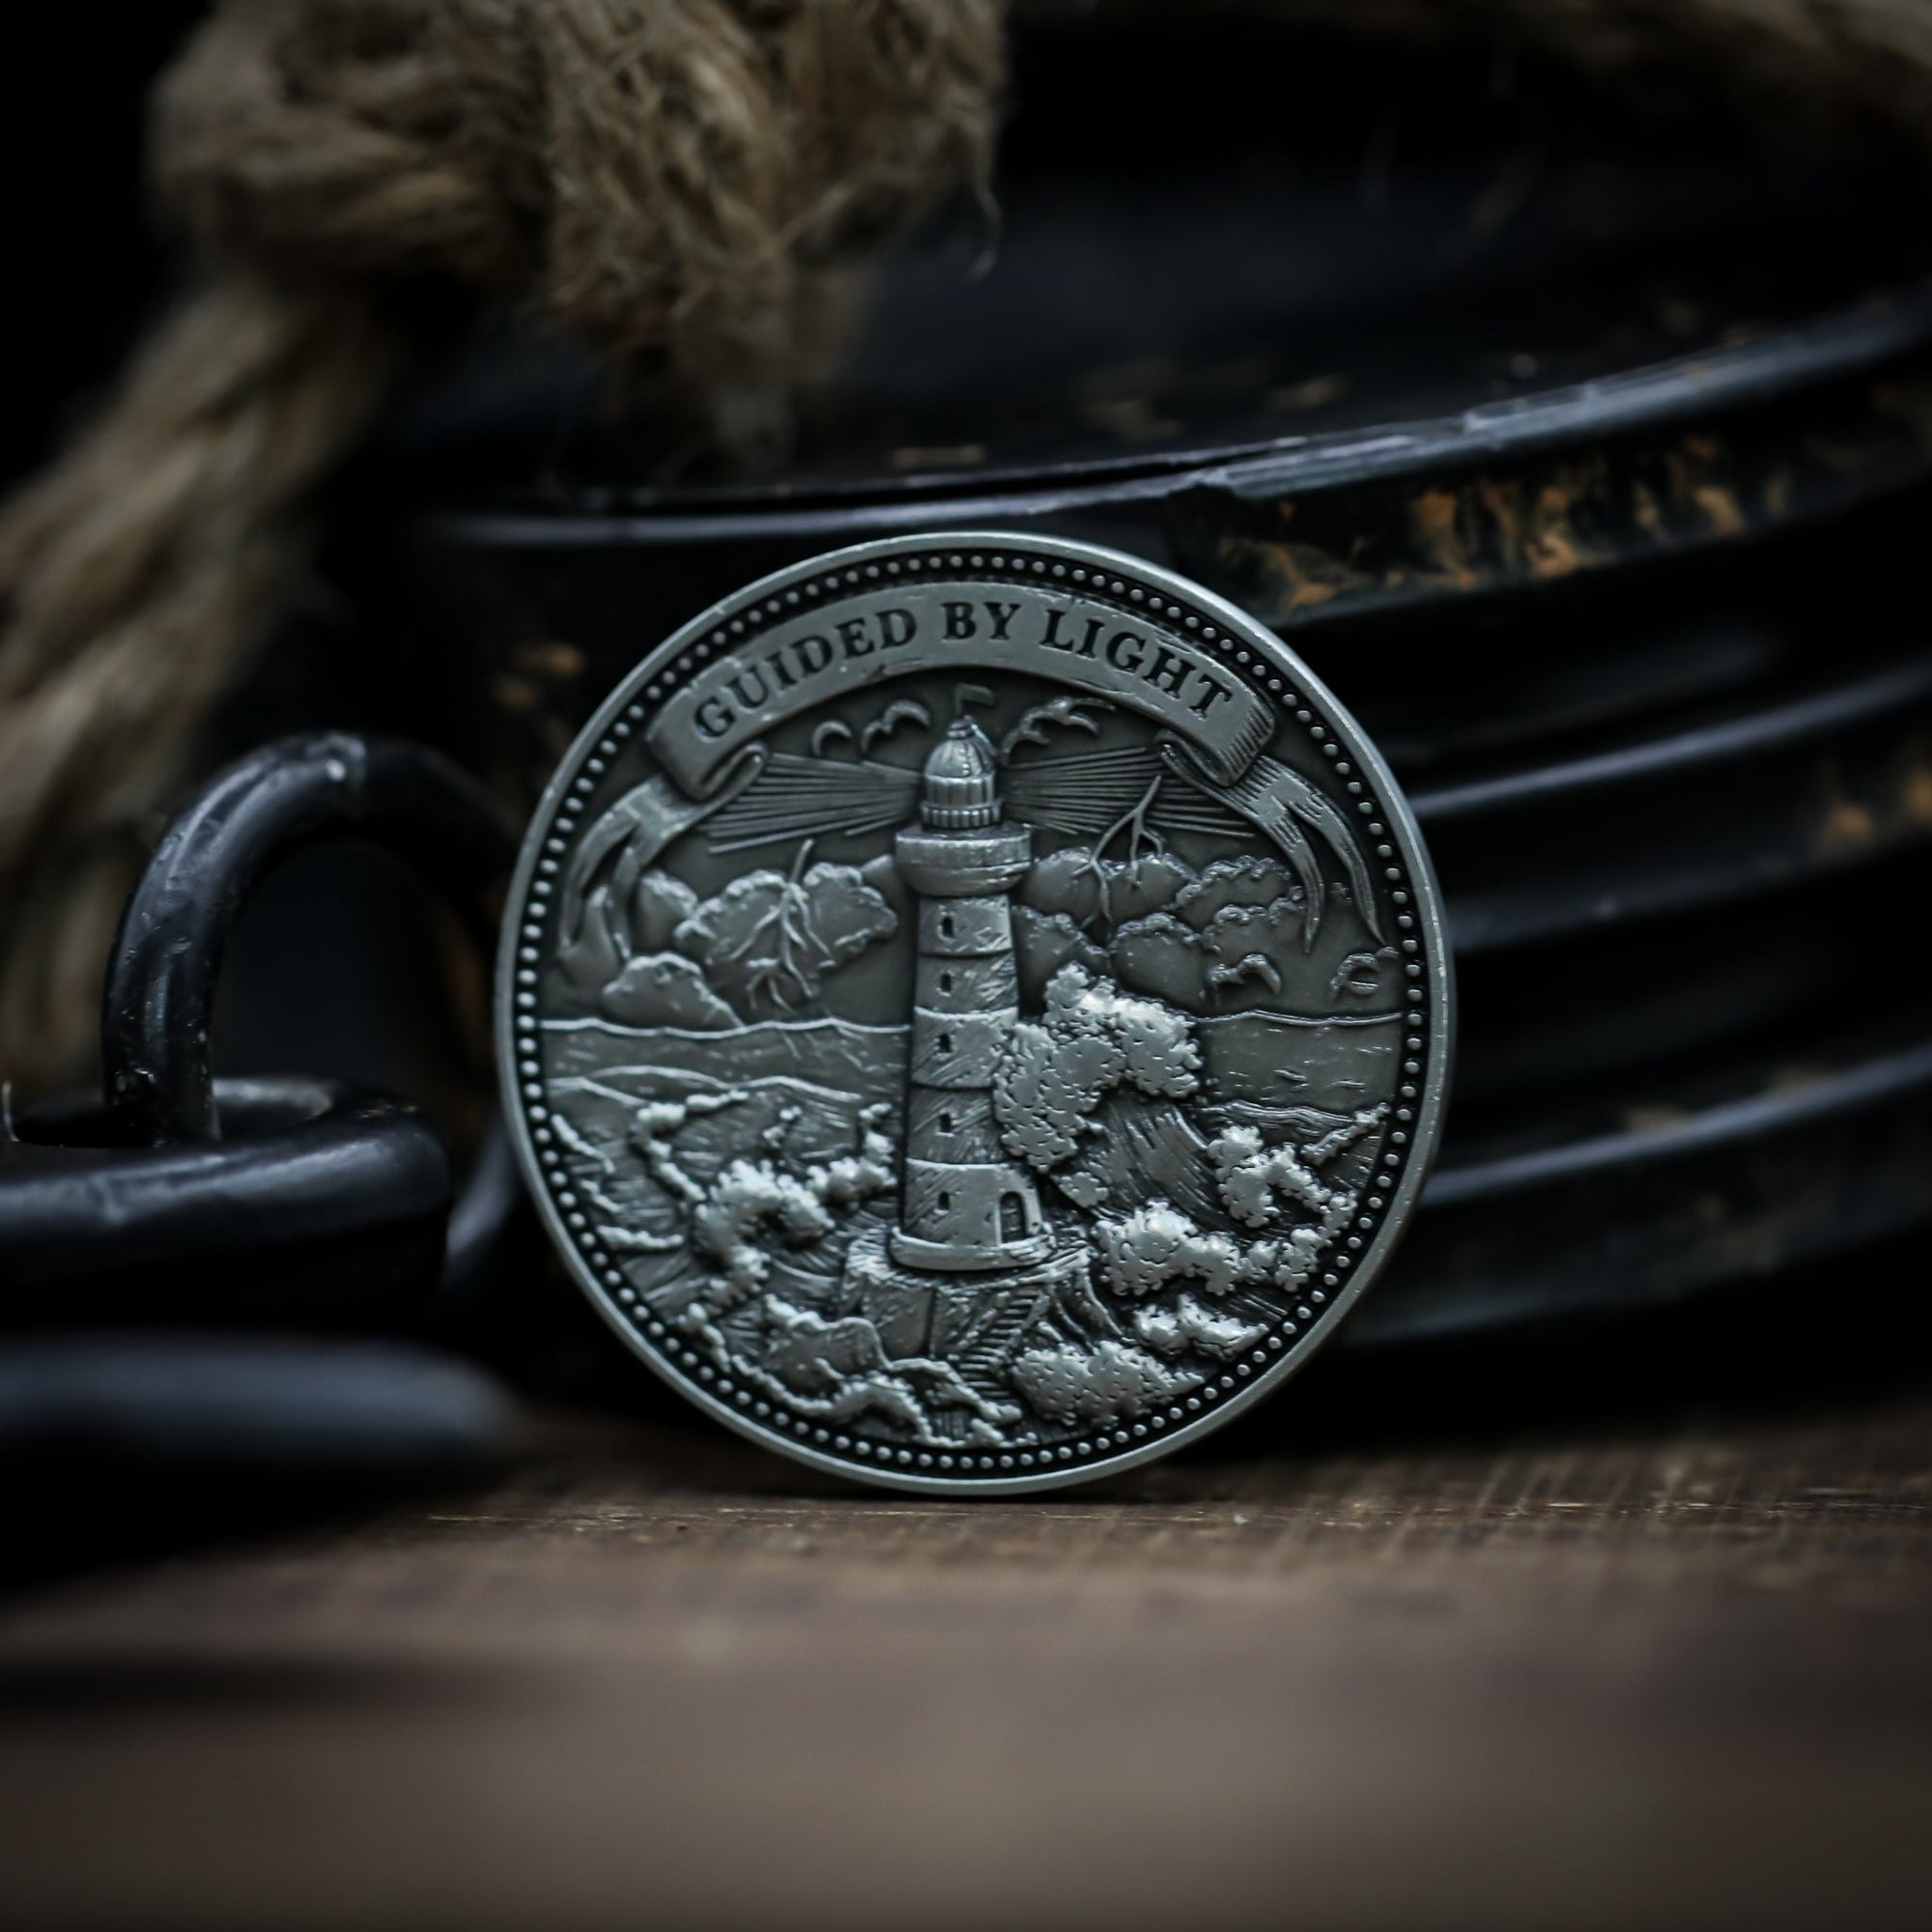 Pirate's Coin Set Ironsmith® 